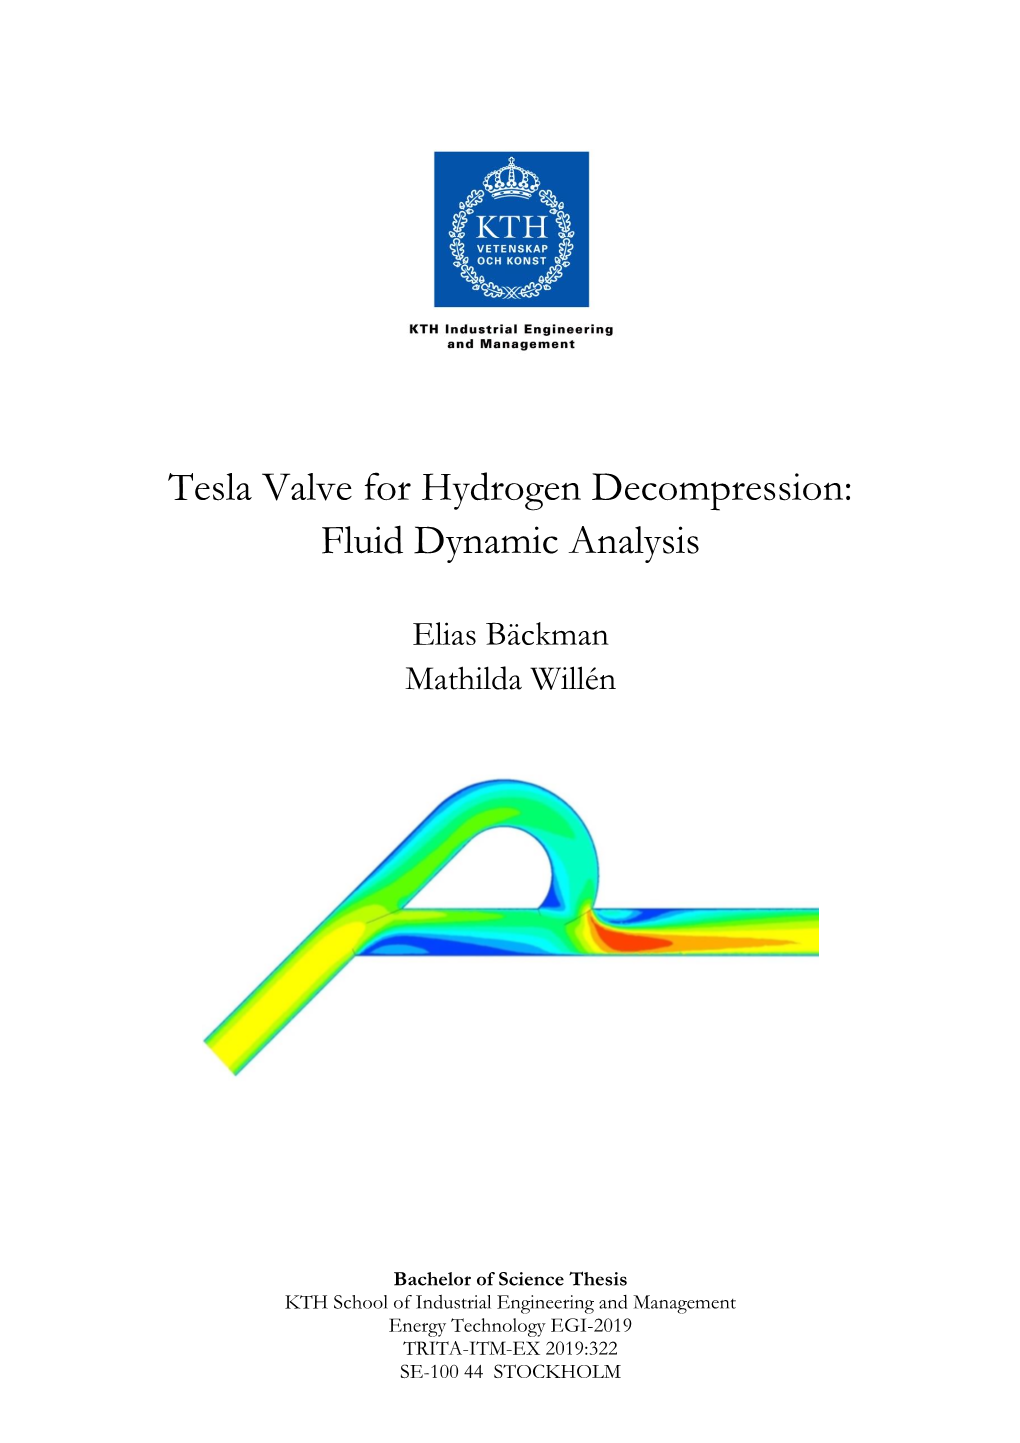 Tesla Valve for Hydrogen Decompression: Fluid Dynamic Analysis